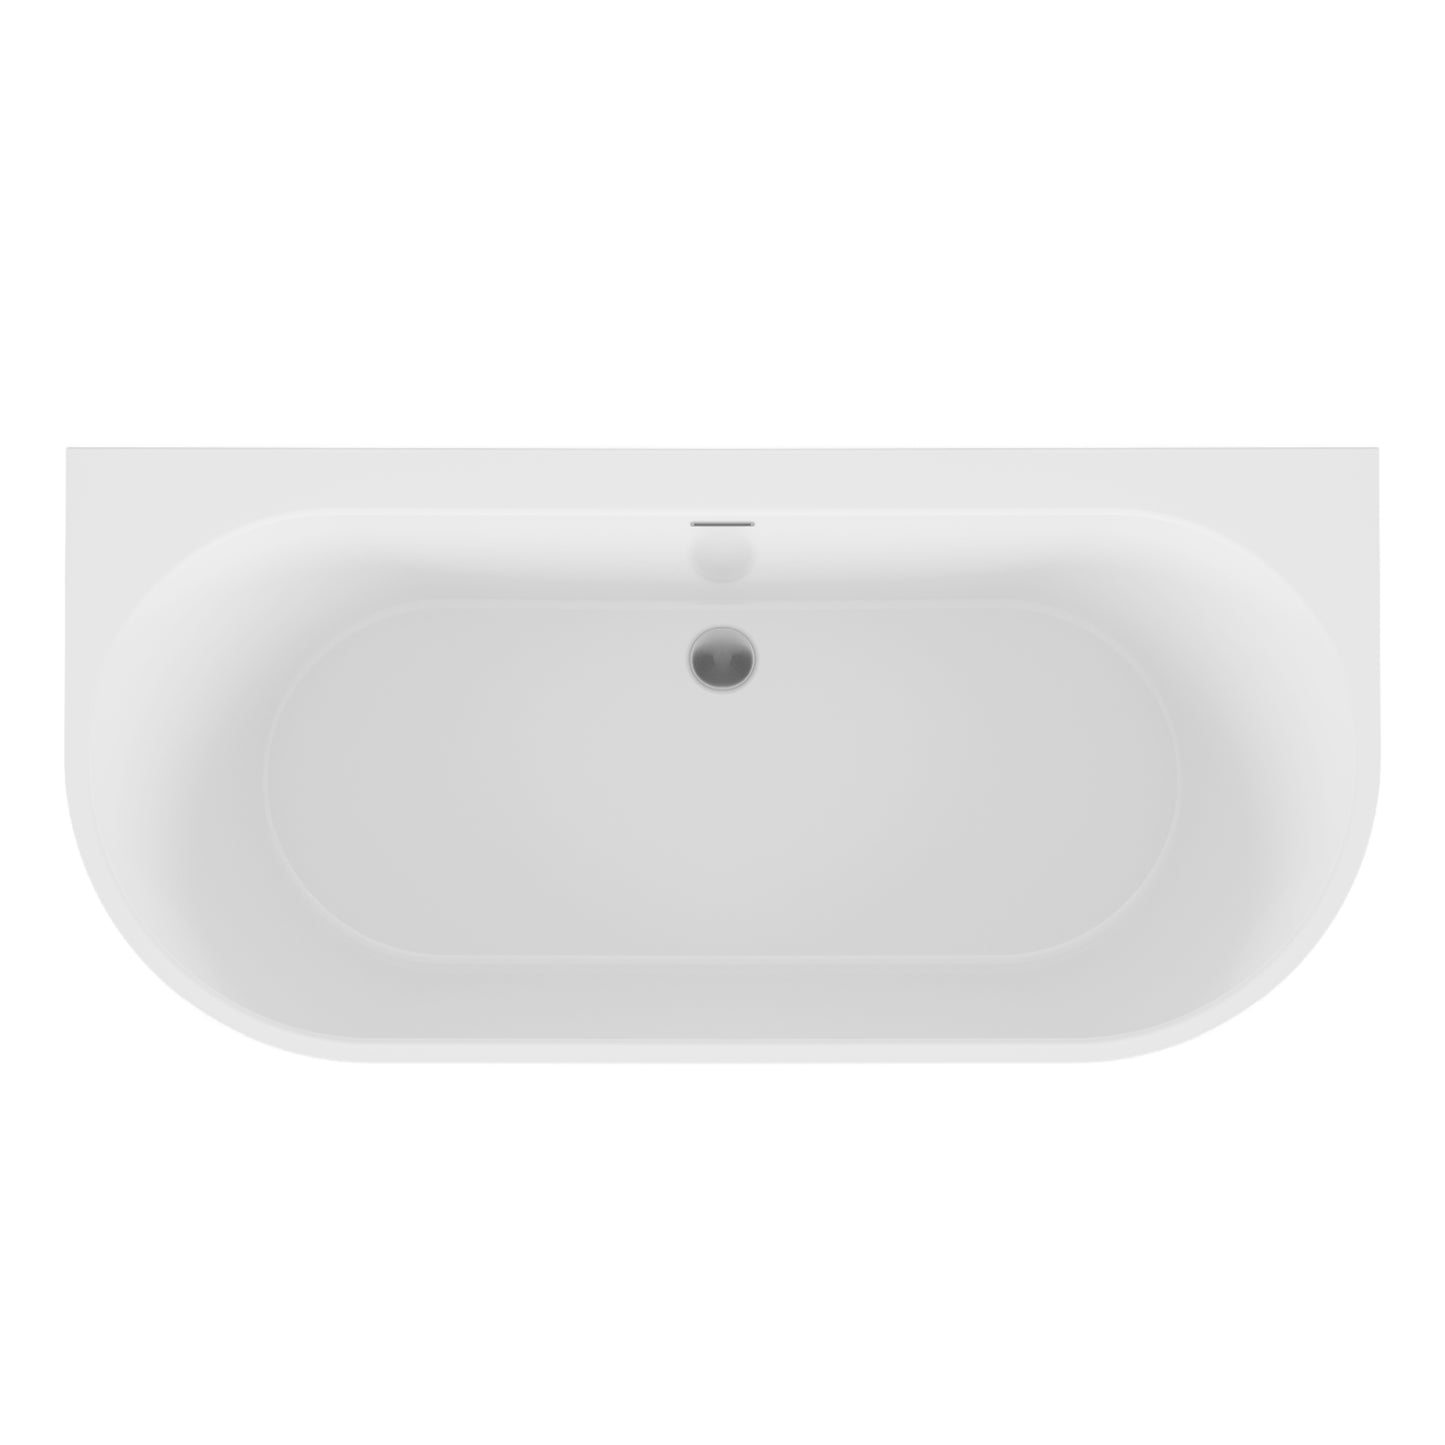 Acrylic freestanding bathtube SOLA 160 x 75 cm